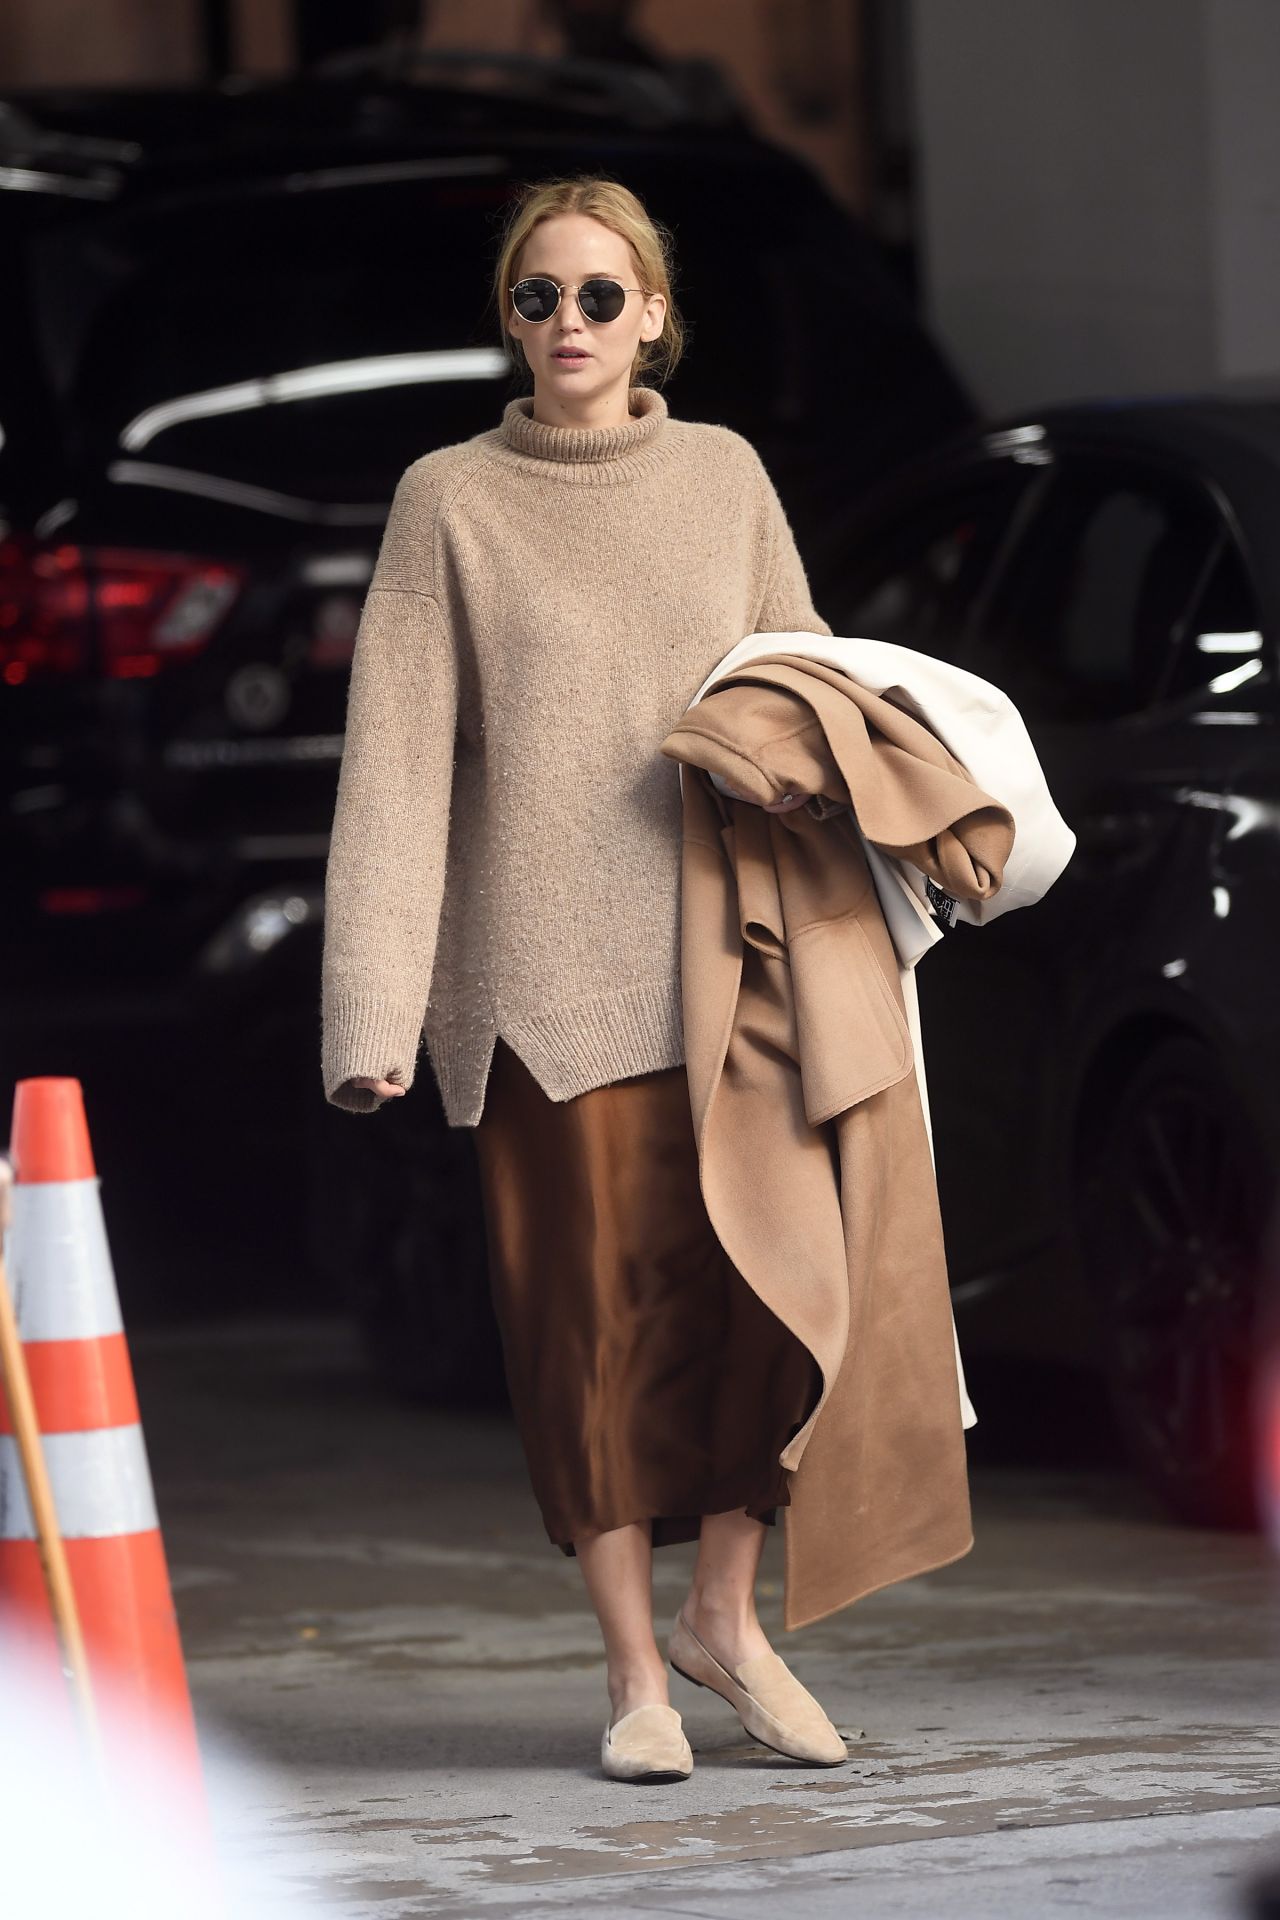 Love Jennifer Lawrence’s casual street style :)